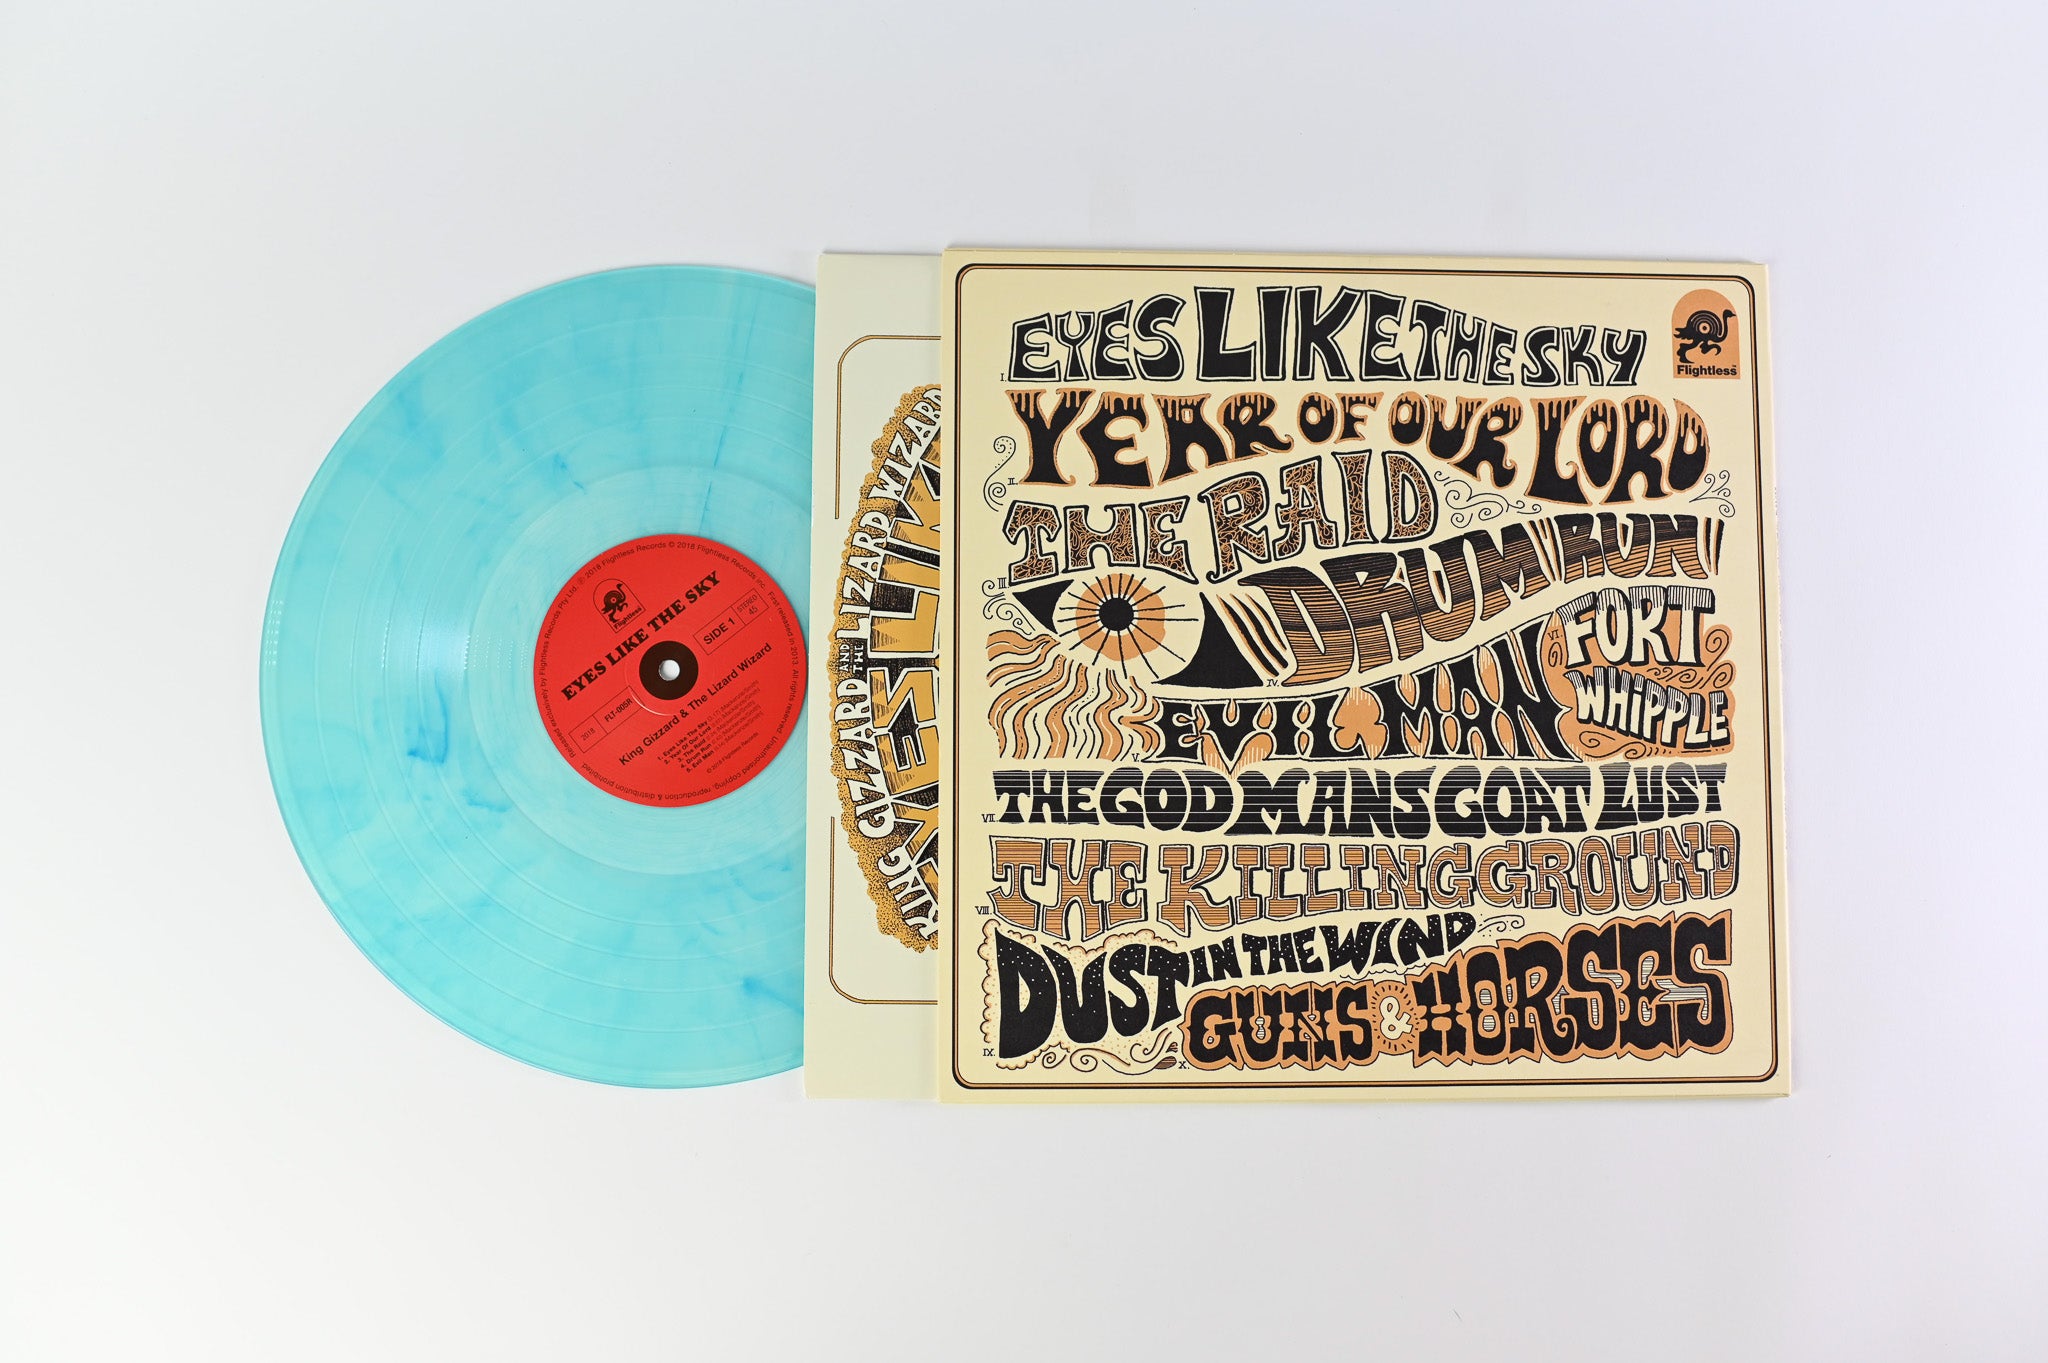 King Gizzard And The Lizard Wizard - Eyes Like The Sky Limited Reissue on Flightless Gun Smoke Vinyl